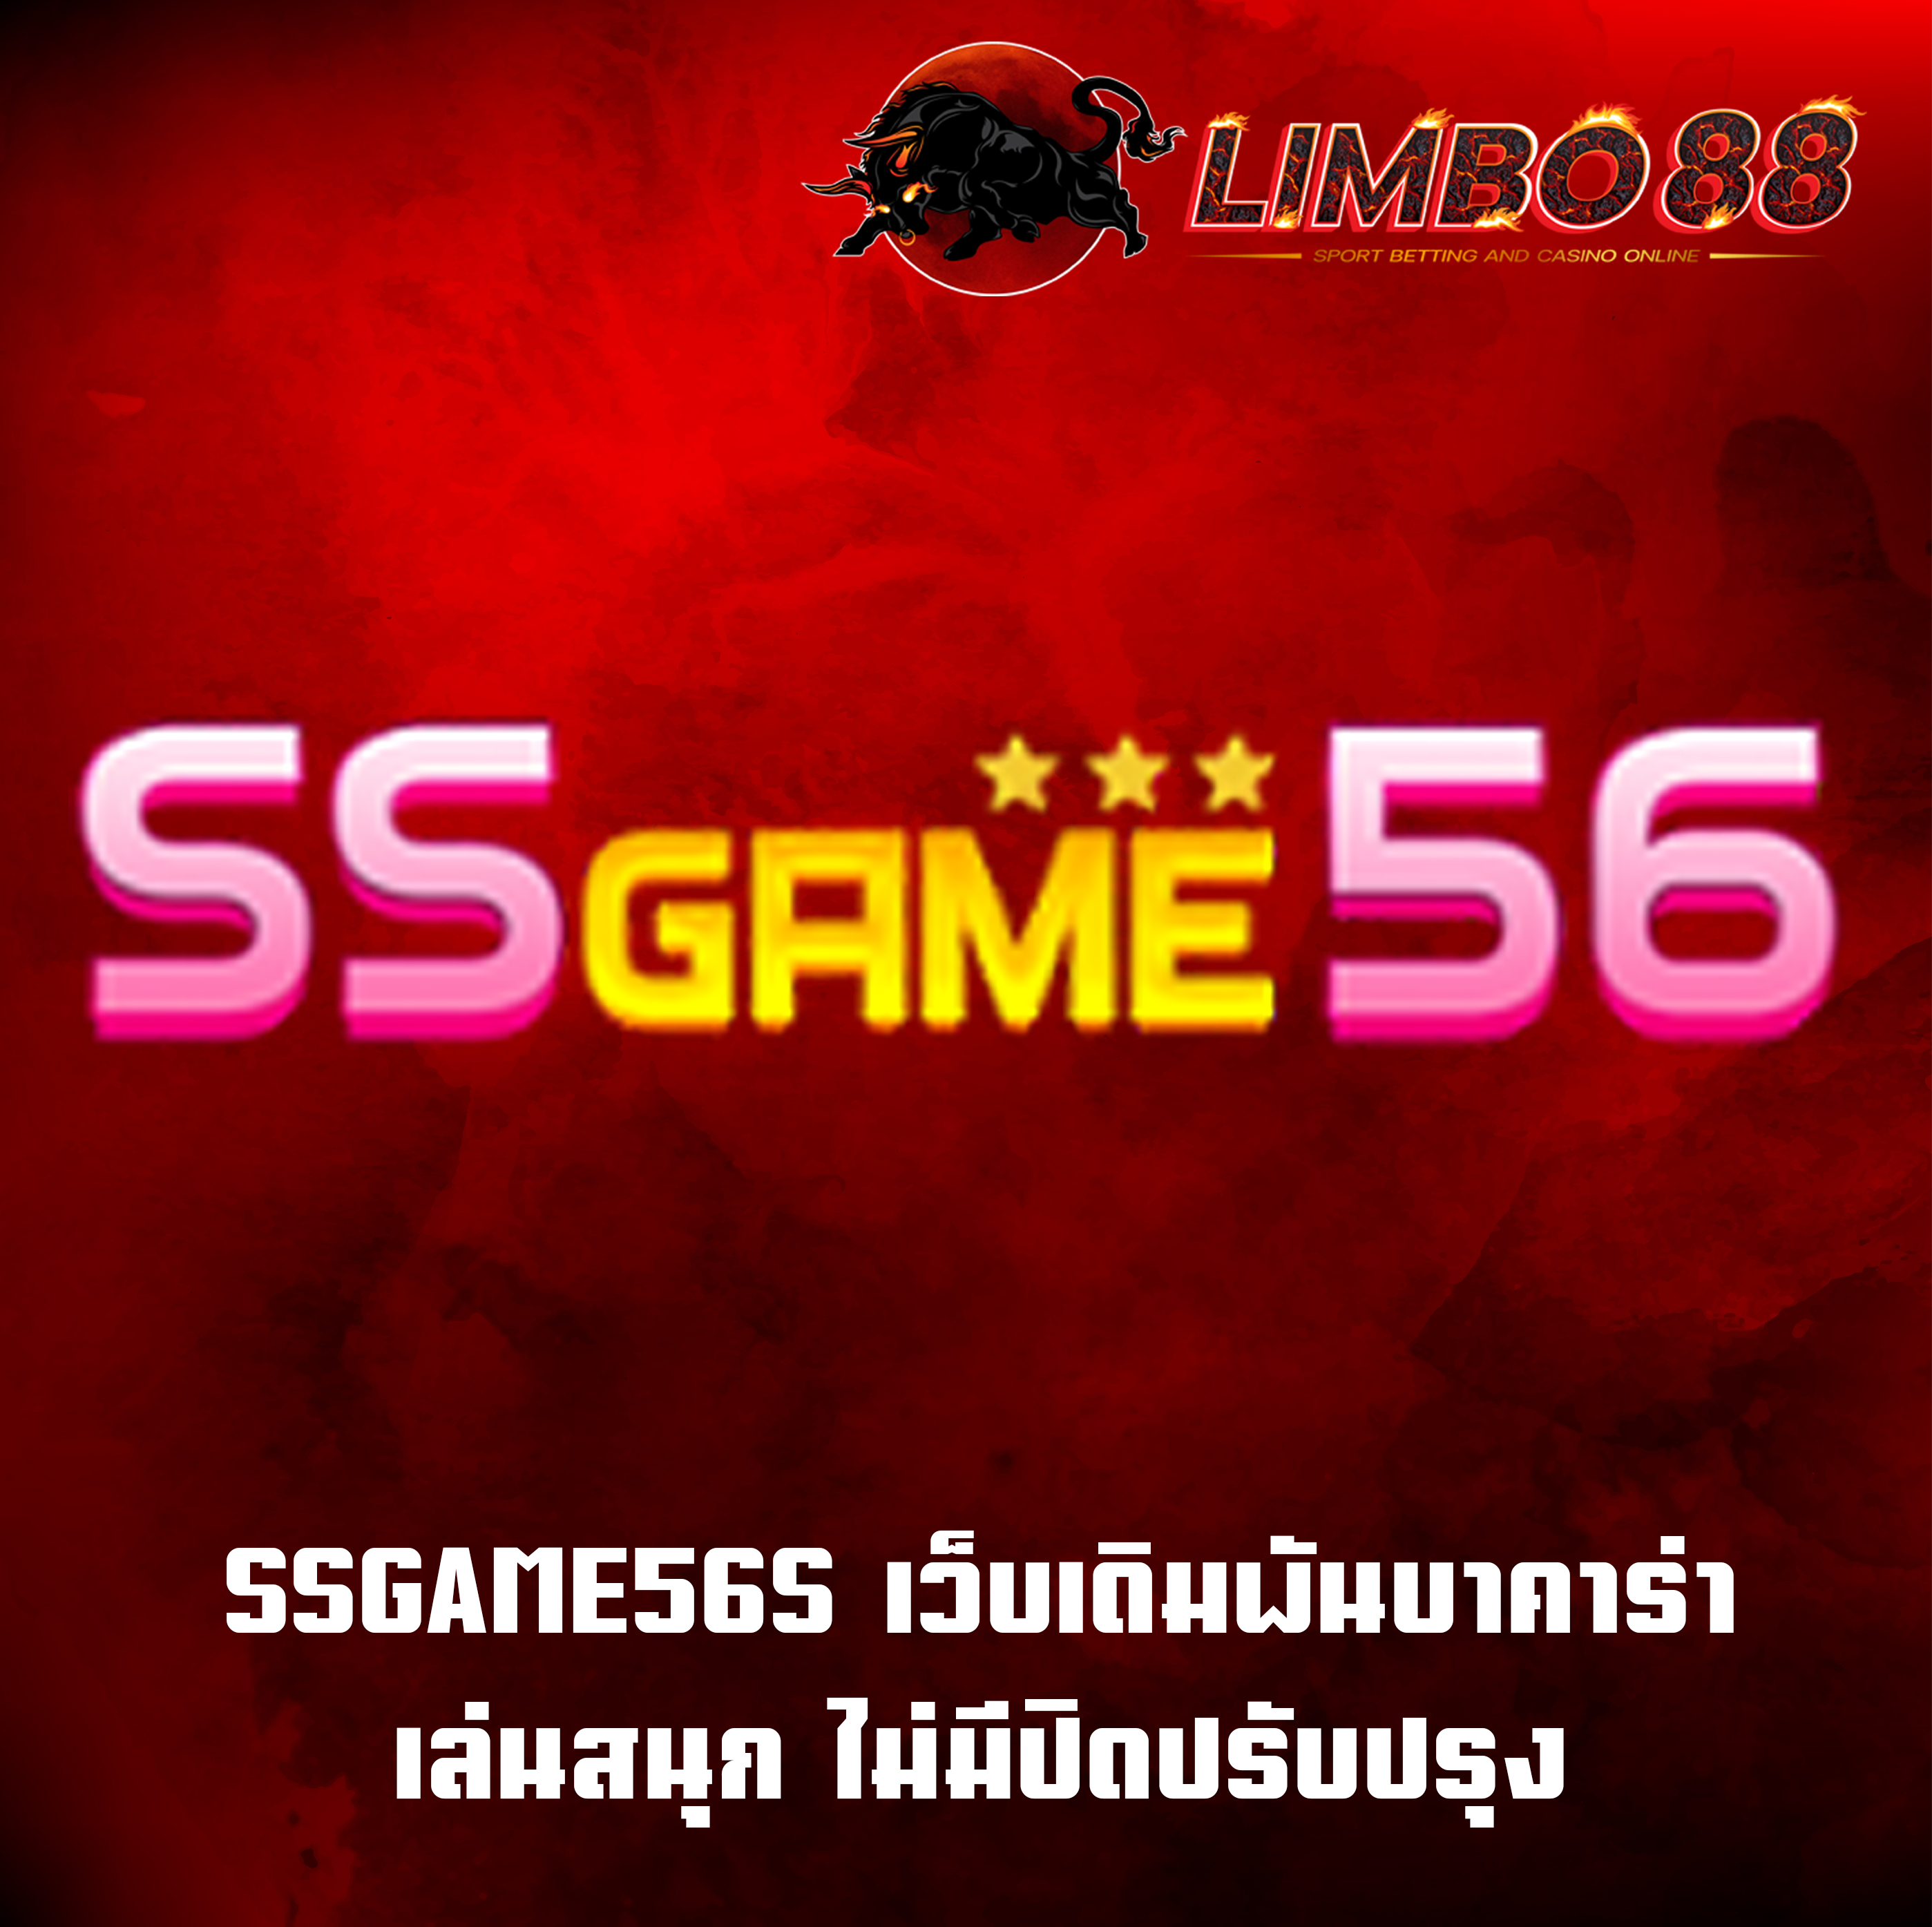 SSGAME56S เว็บเดิมพันบาคาร่า เล่นสนุก ไม่มีปิดปรับปรุง